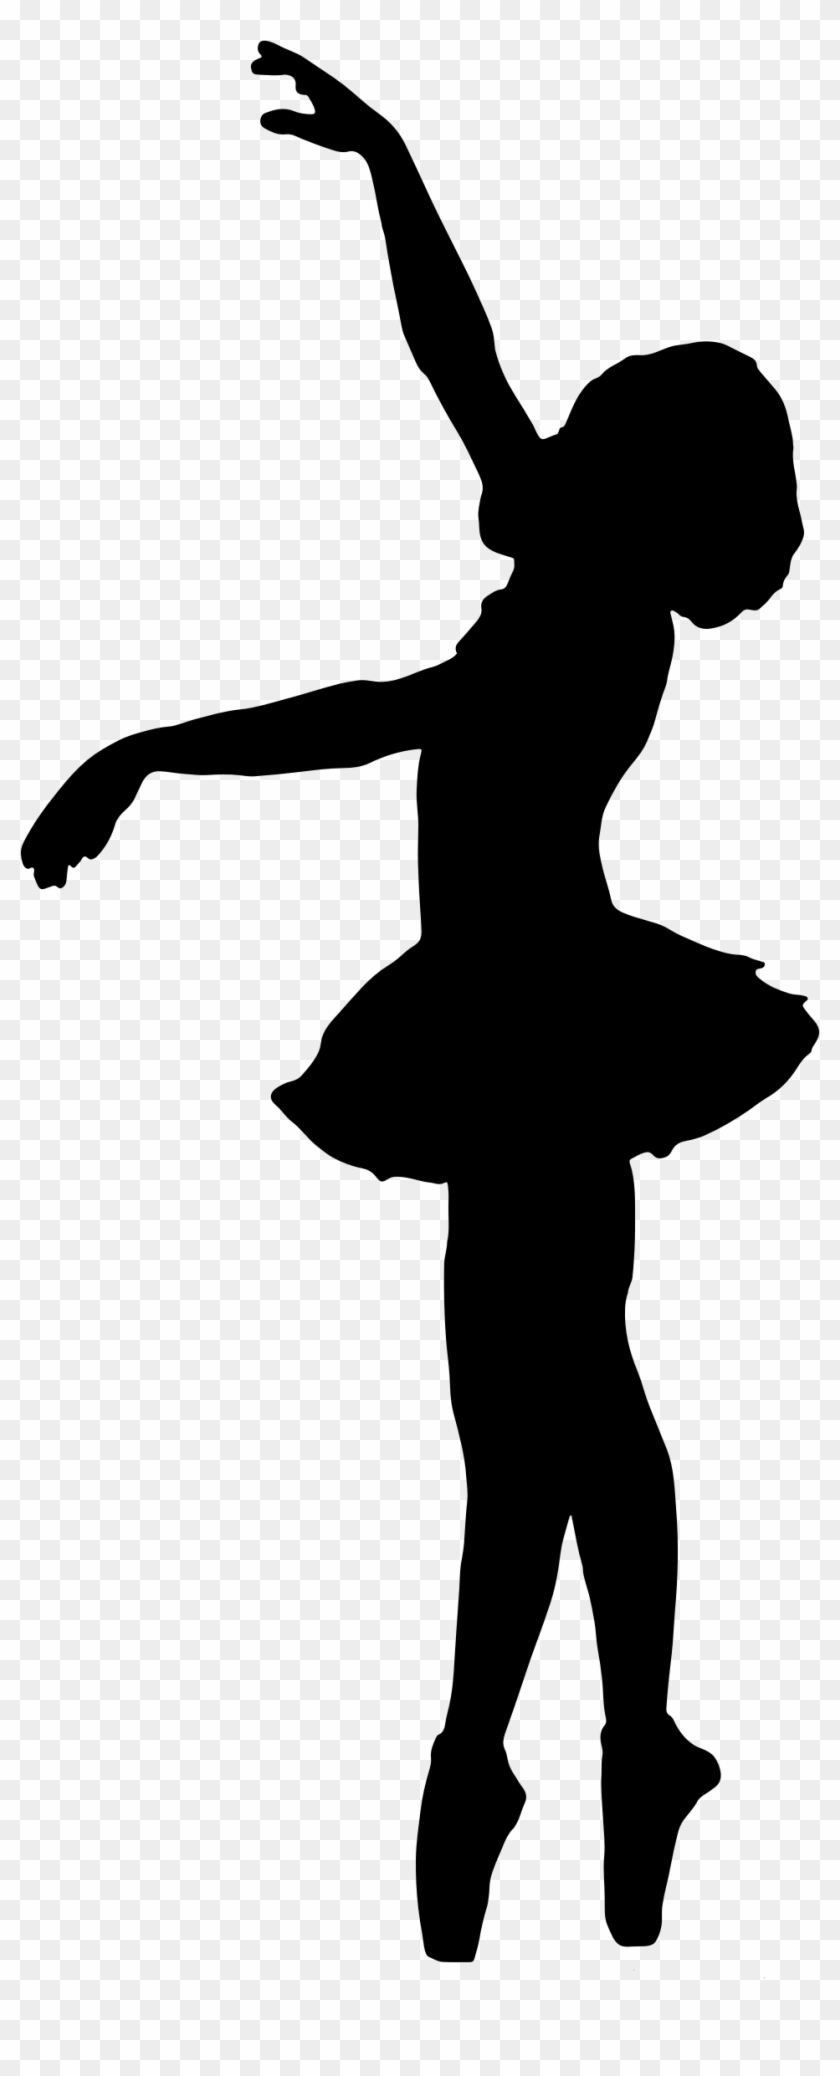 Big Image - Child Ballerina Silhouette #156750